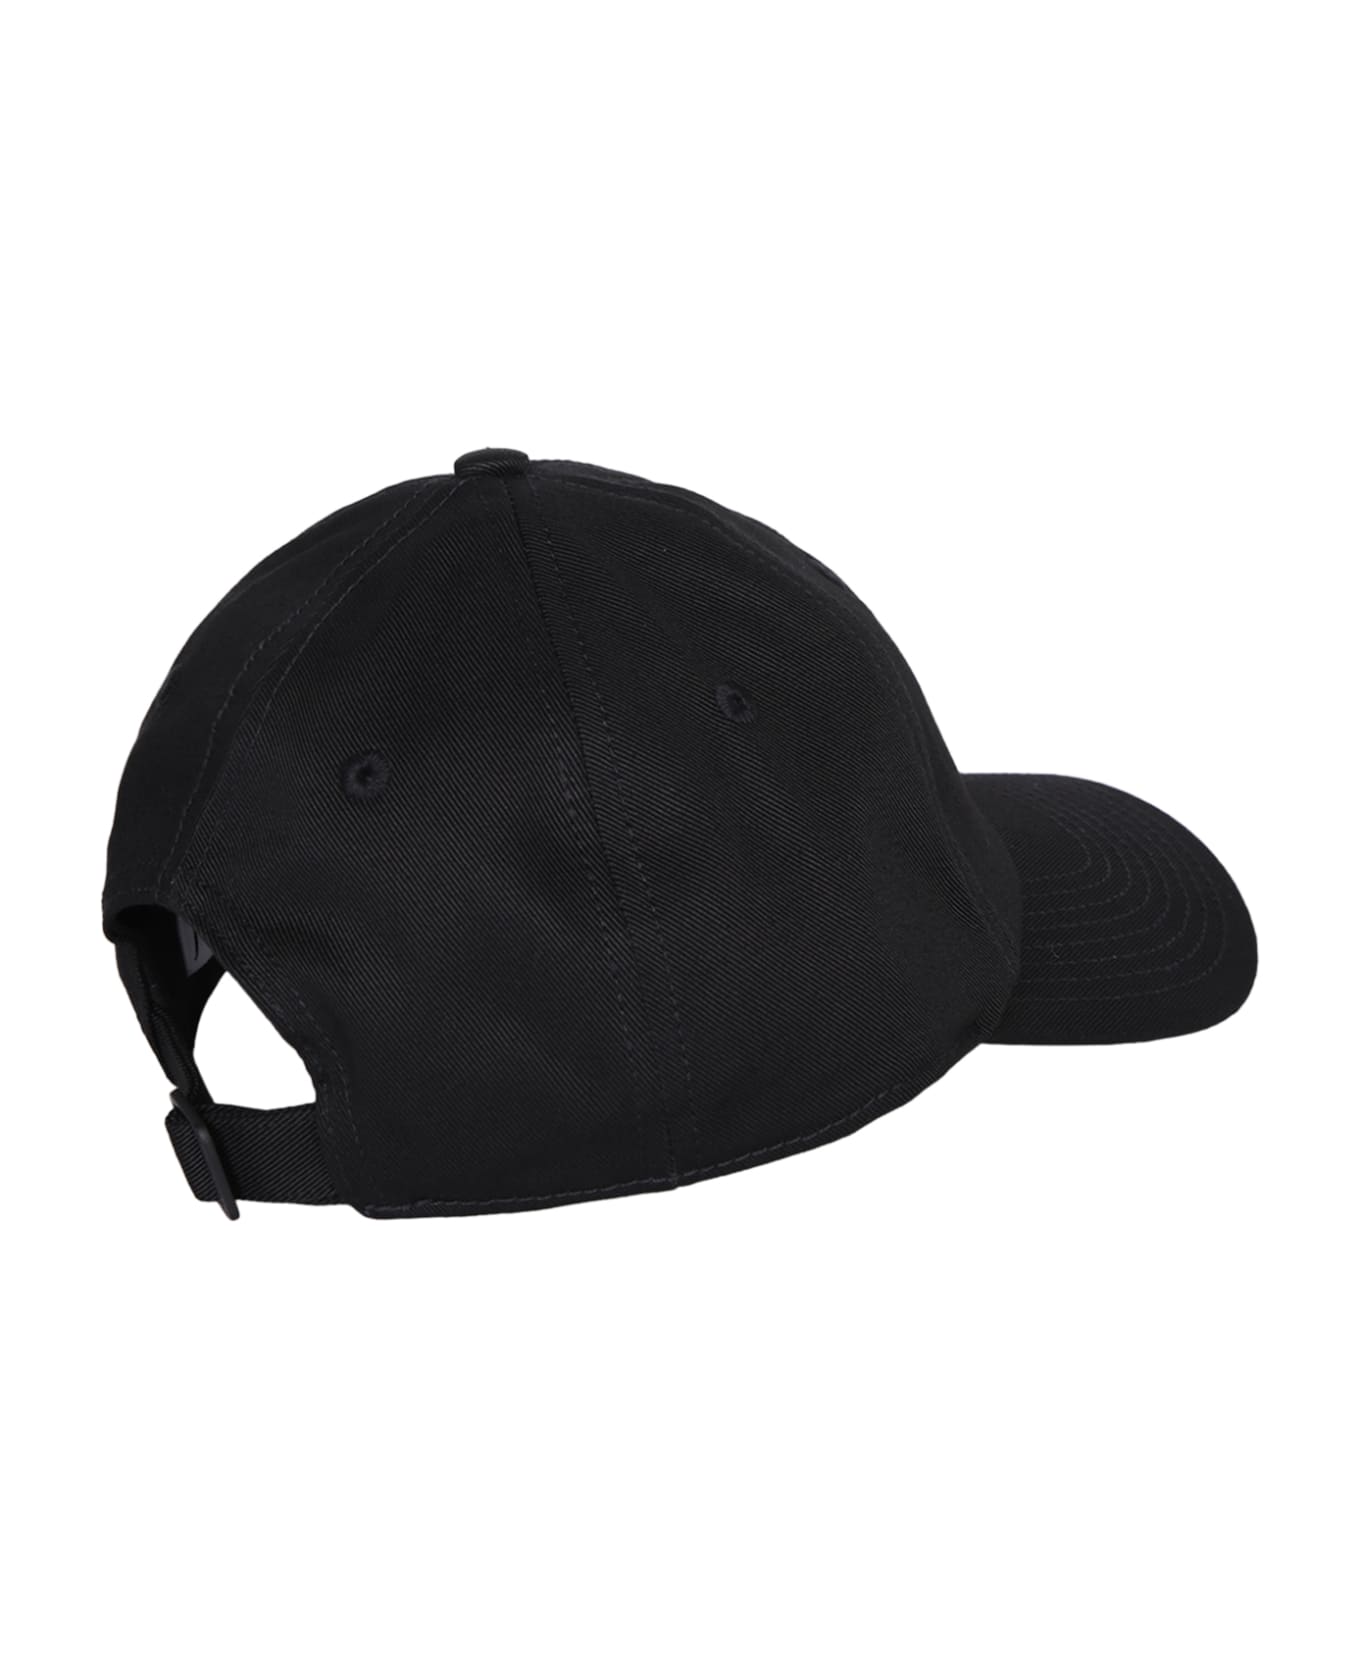 J.W. Anderson Logo Black Hat - Black